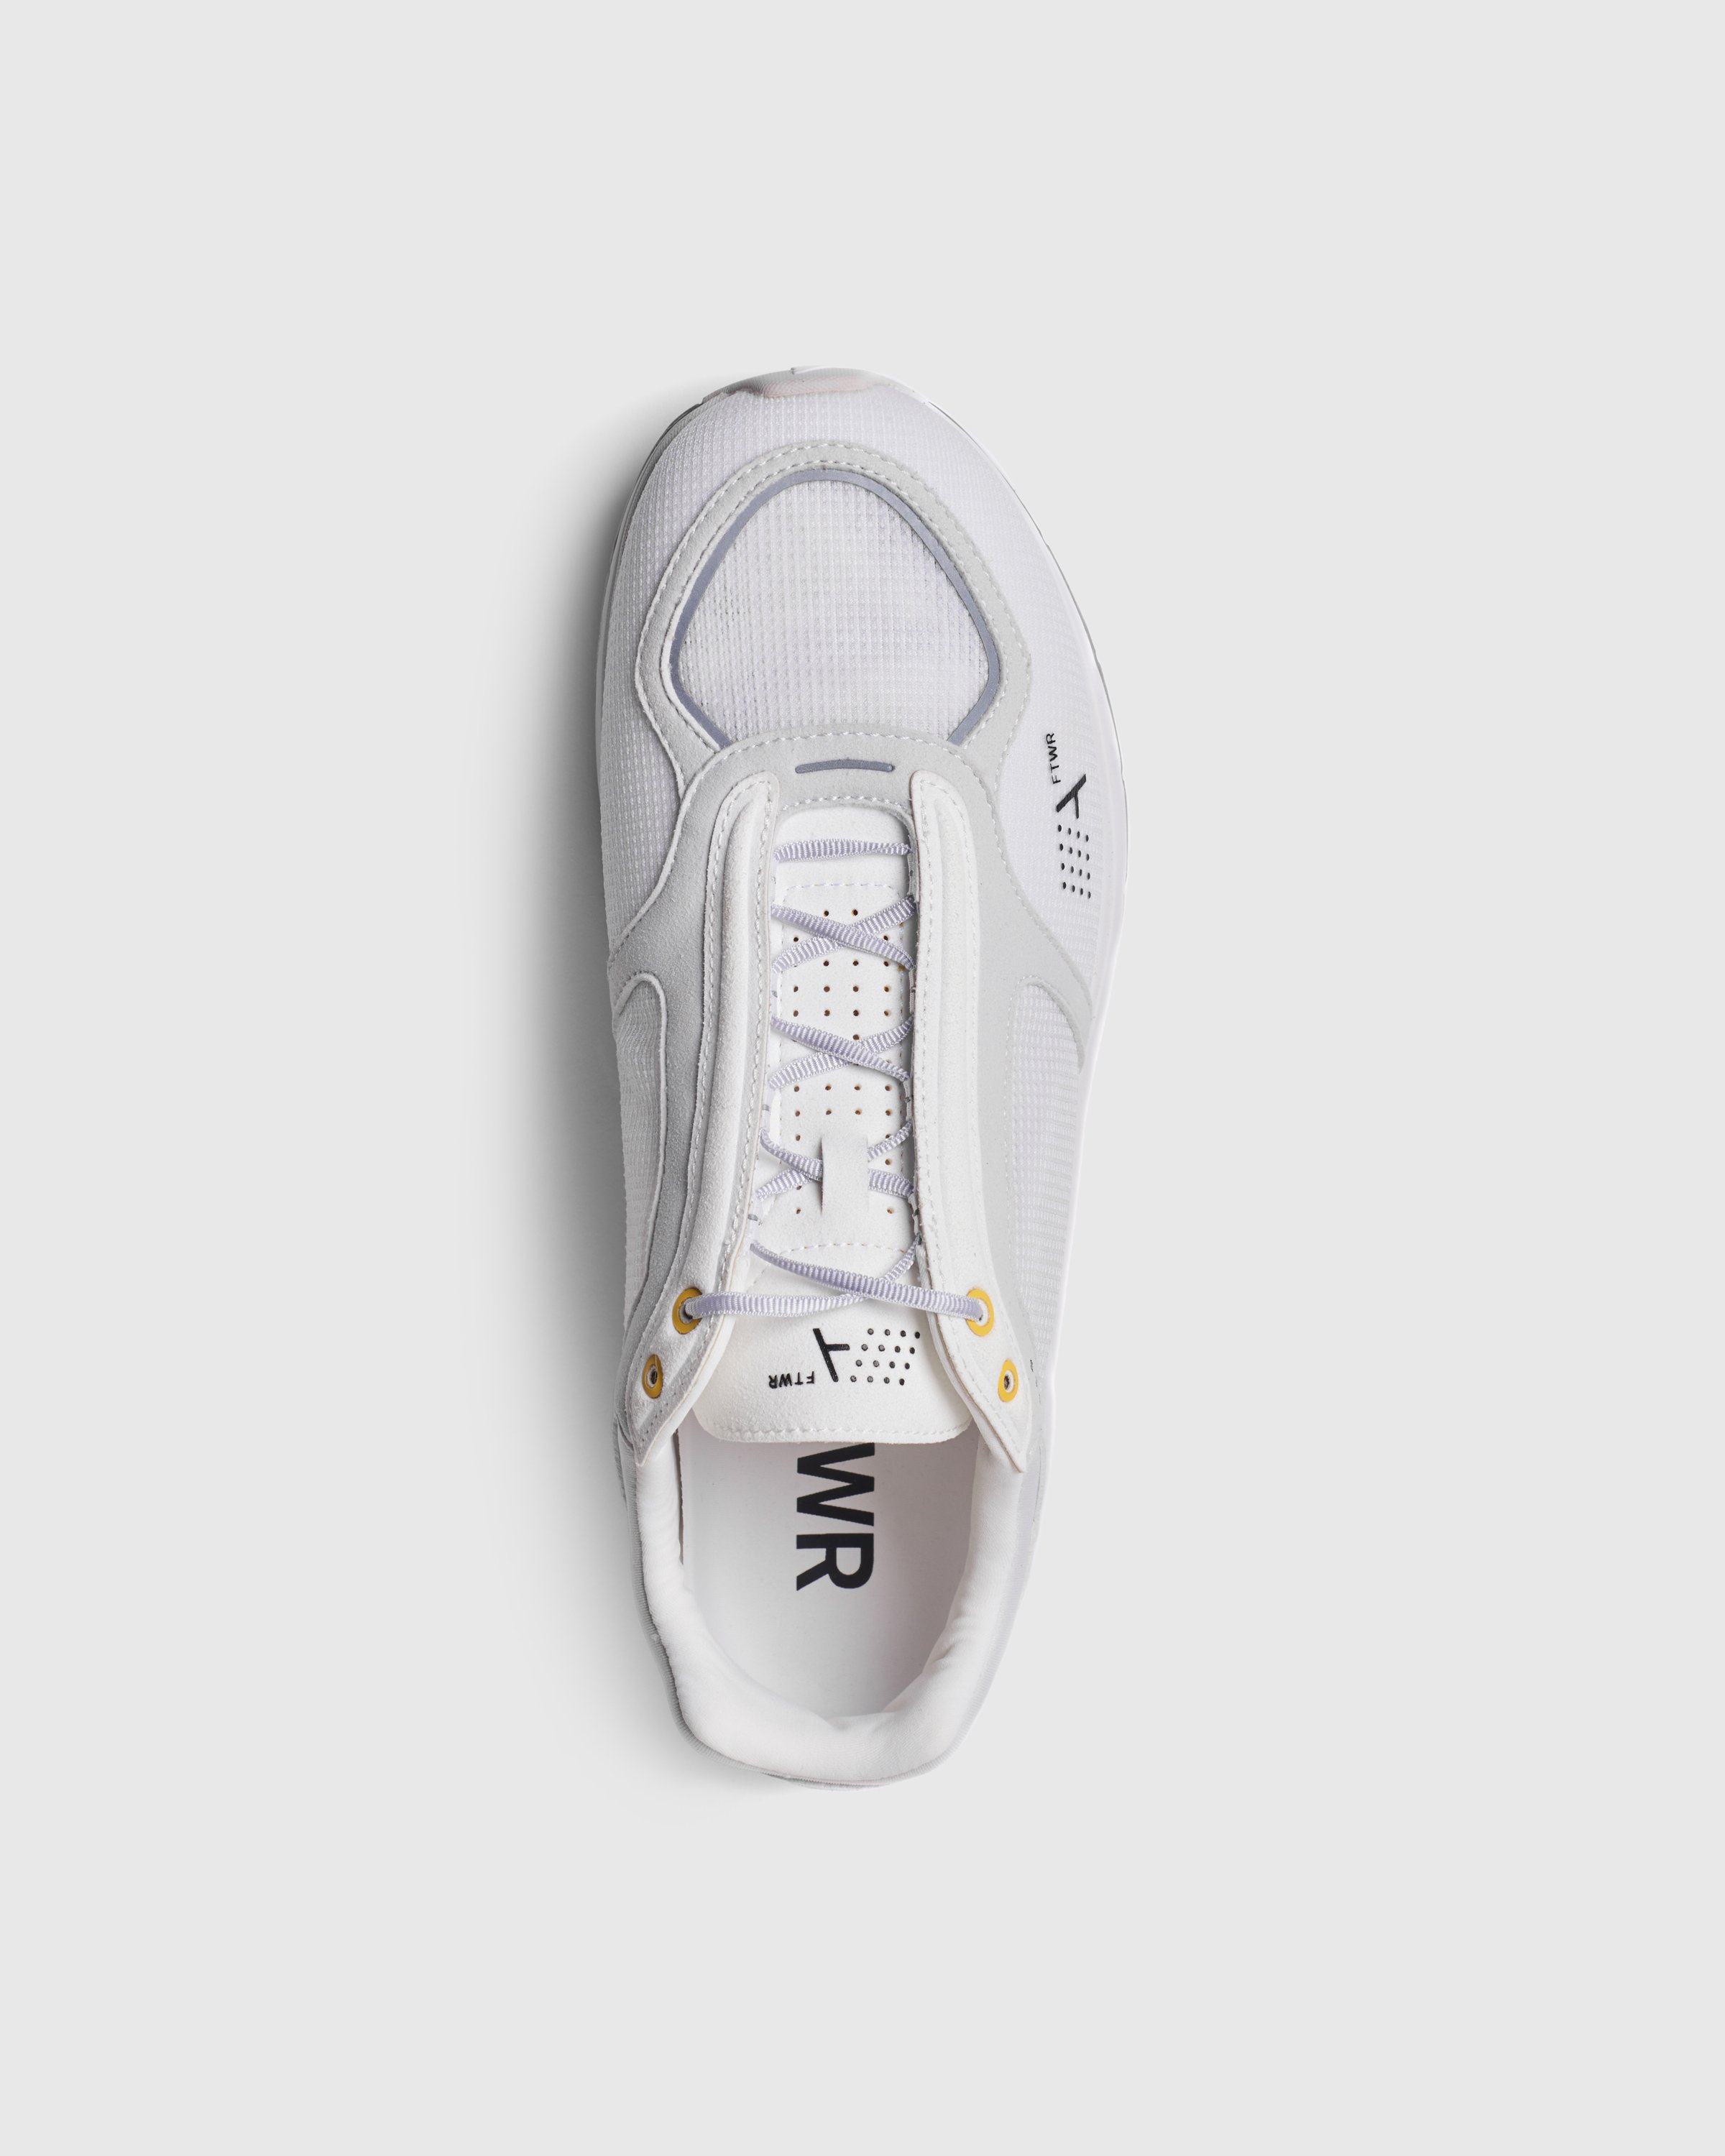 Athletics Footwear - Zero V1 White - Footwear - White - Image 5